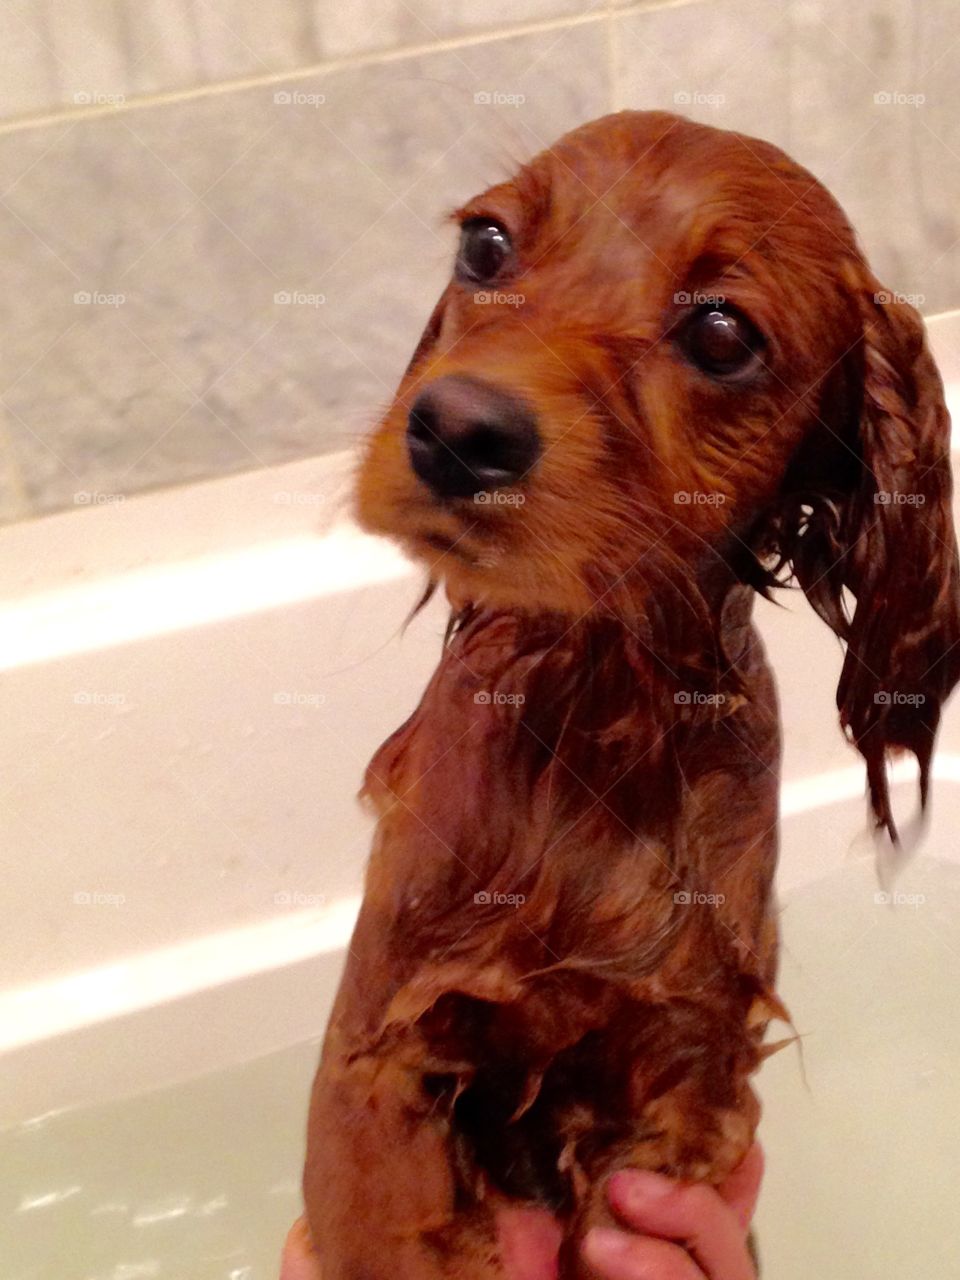 Puppy in the bath 